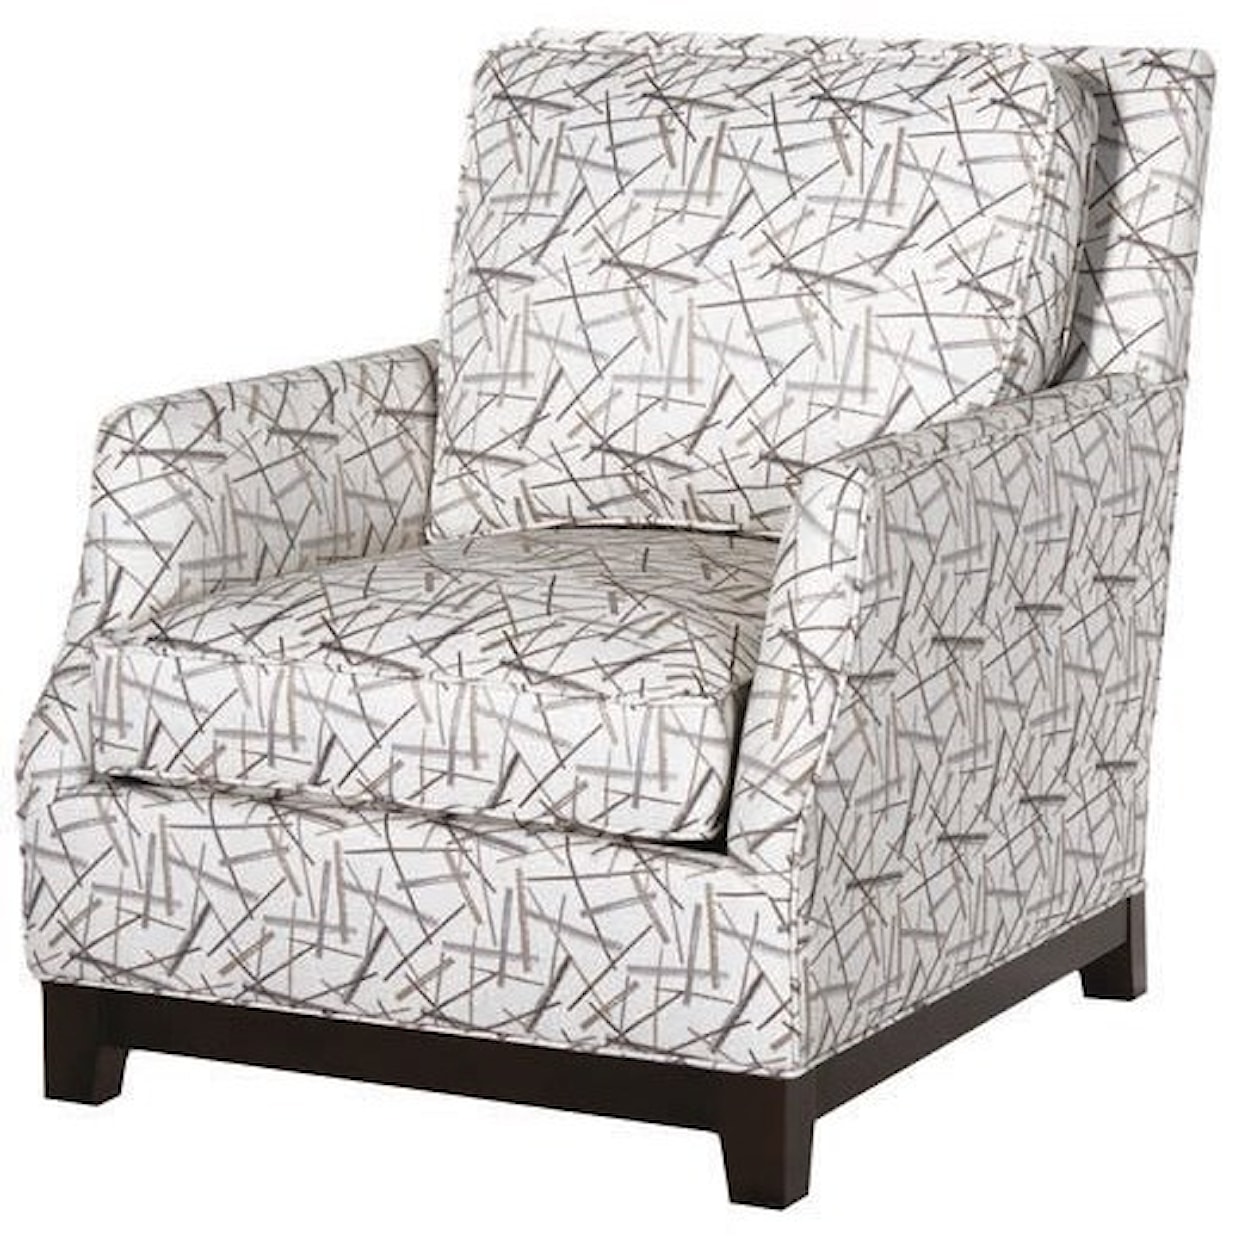 Hallagan Furniture Mansfield Customizable Contemporary Chair